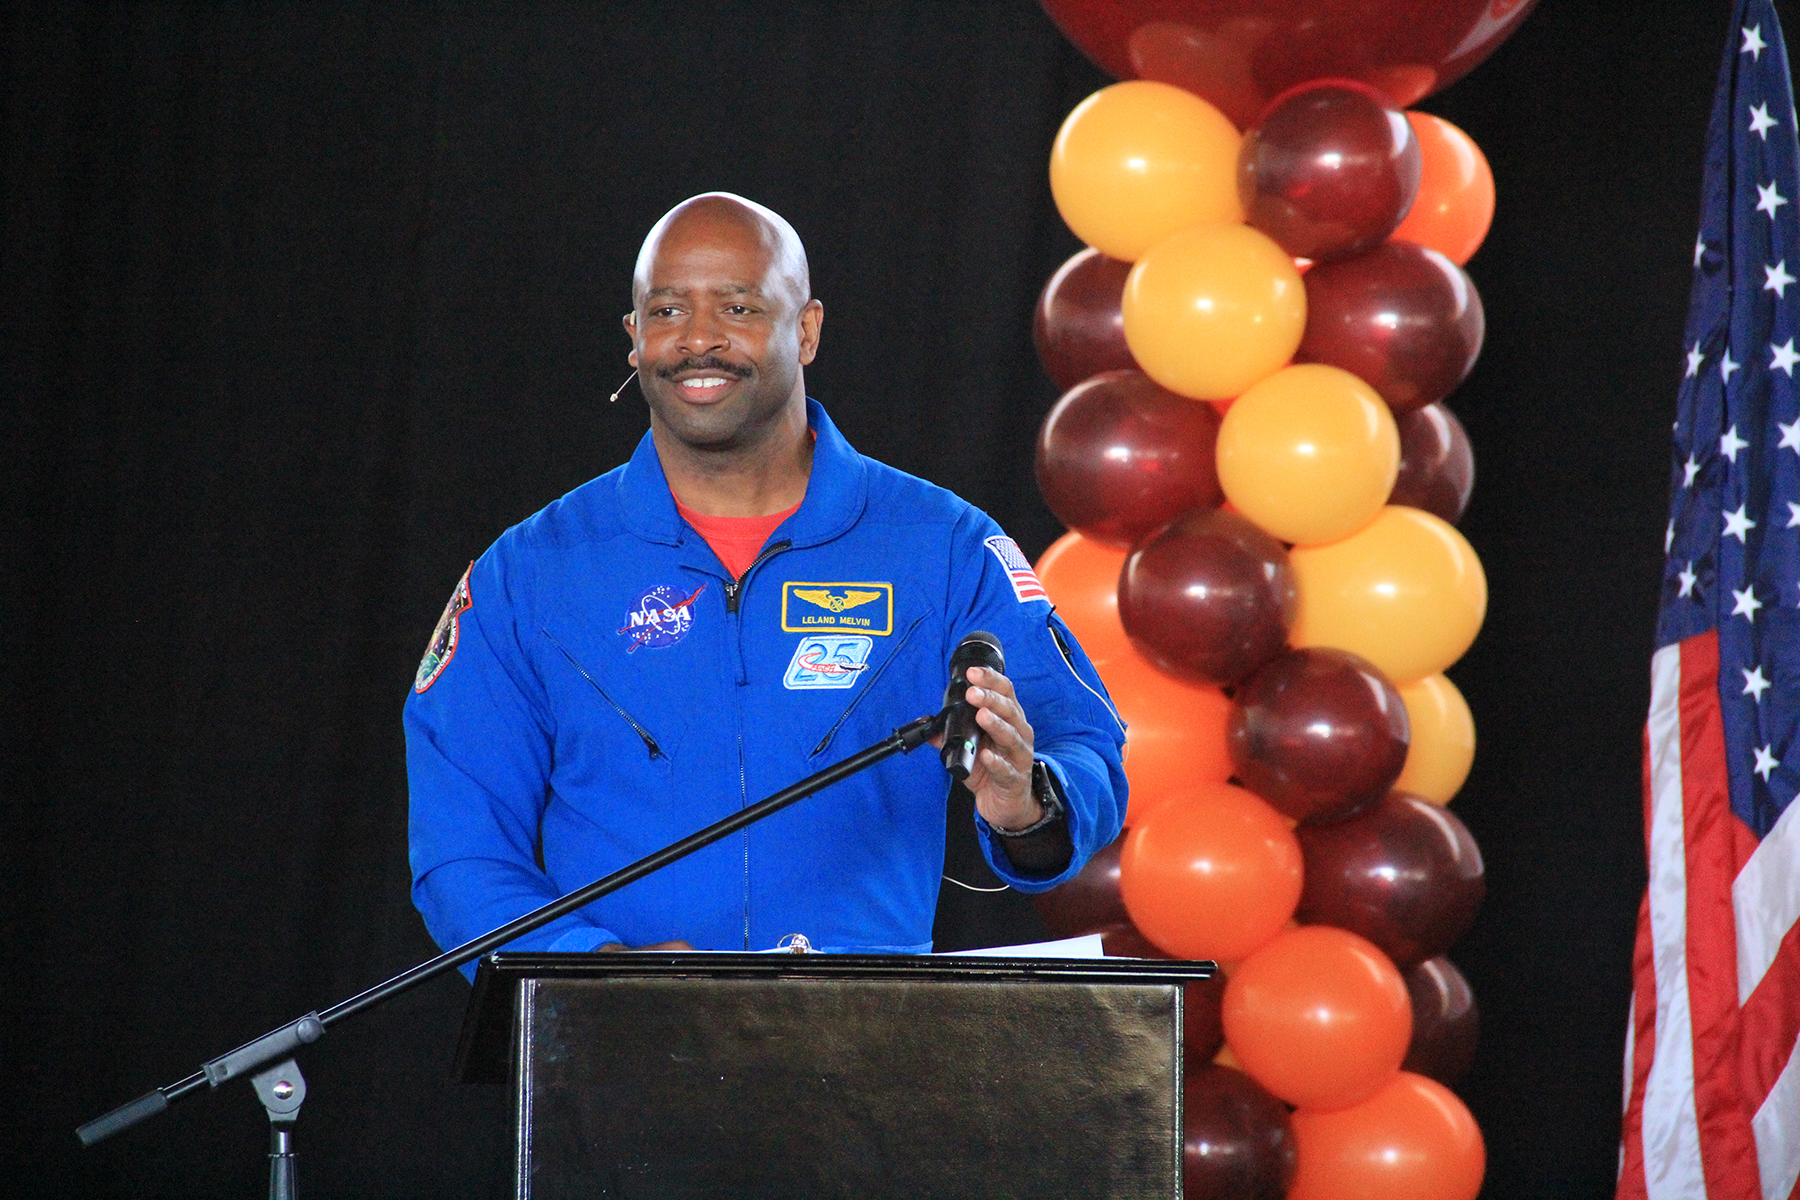 Astronaut Leland Melvin